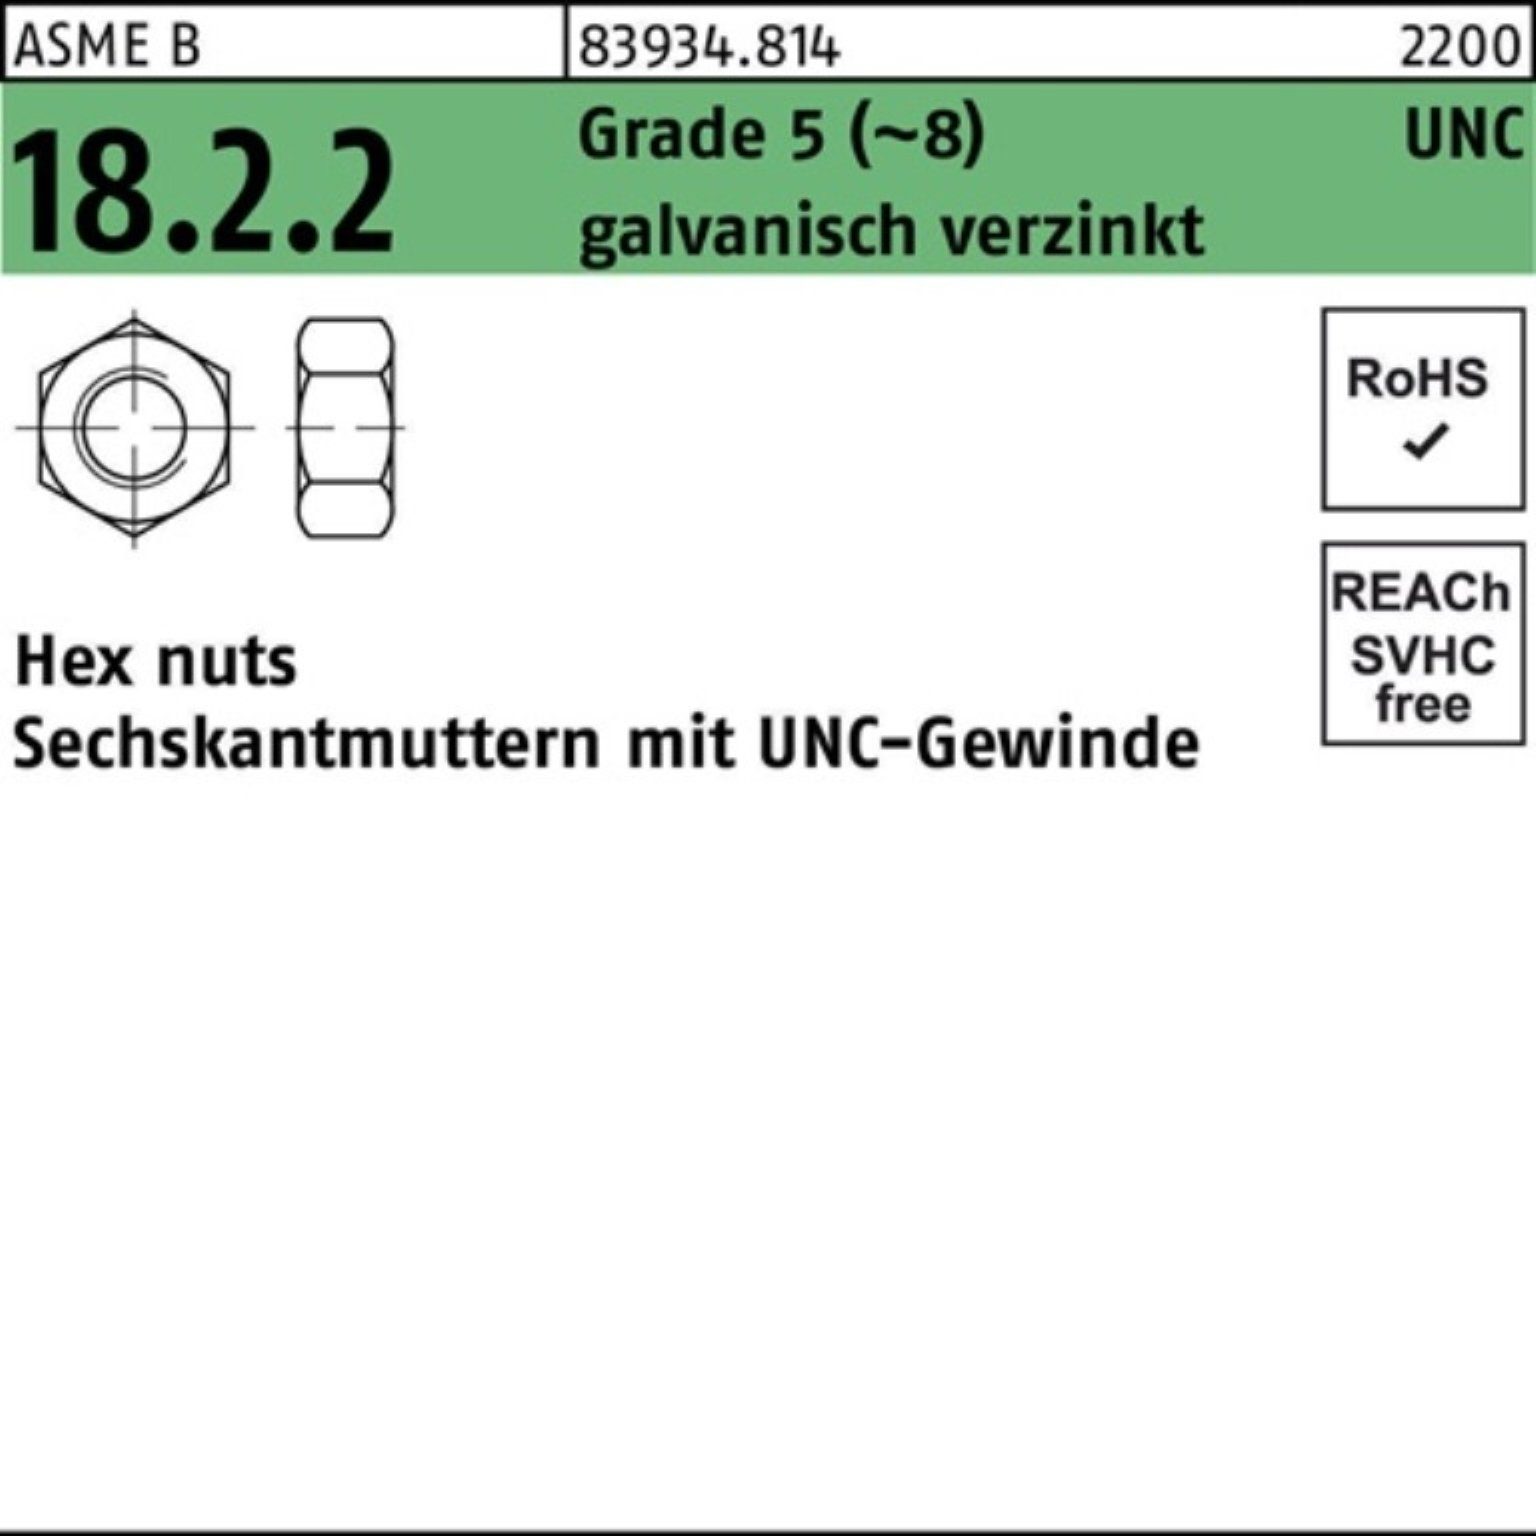 Muttern Grade UNC-Gewinde 83934 (8) galv.v Pack 5 R 3/4 Sechskantmutter 100er Reyher